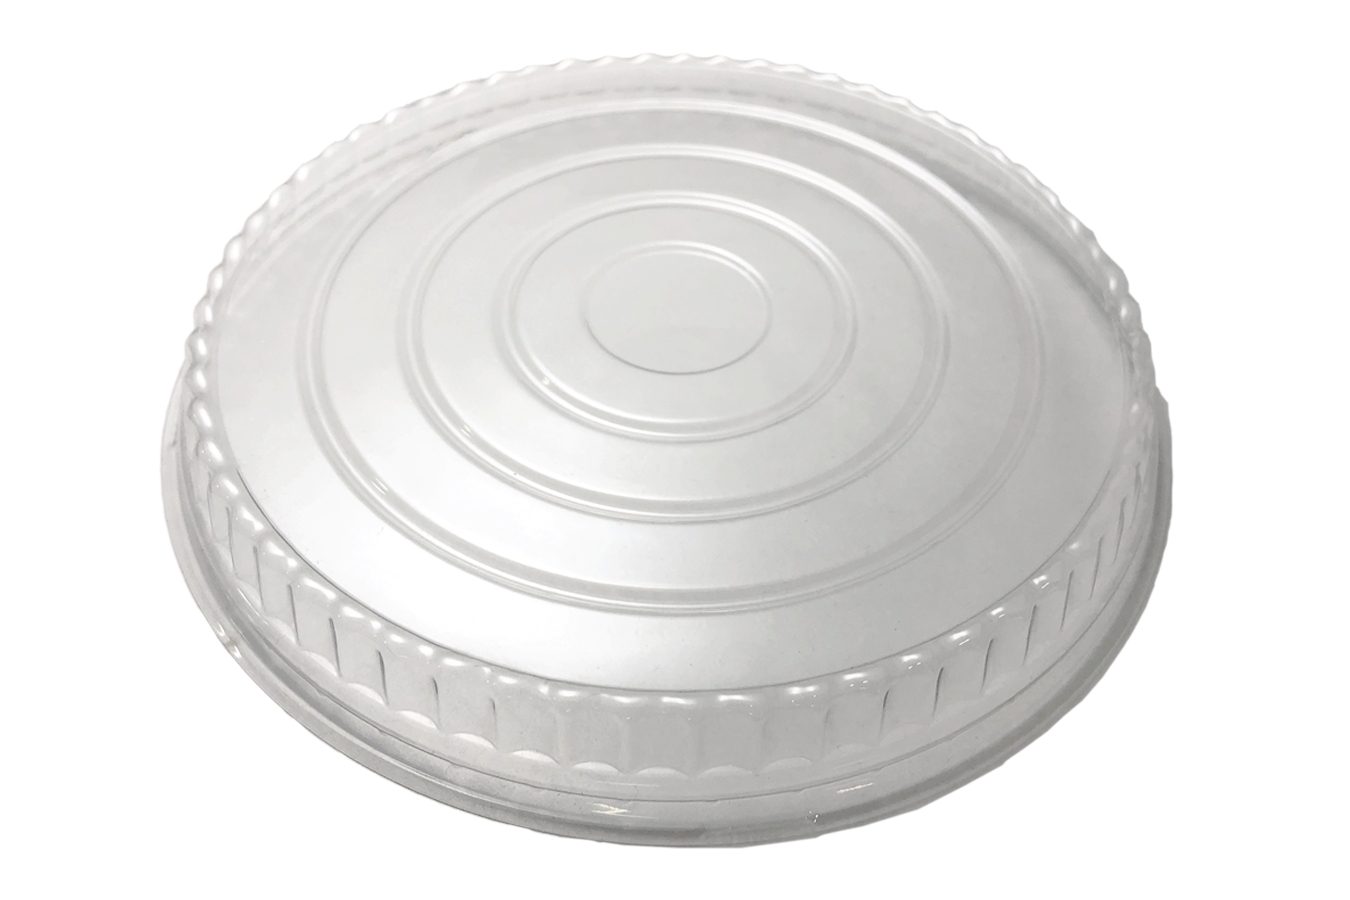 Line art illustration of clear transparent plastic non-vented lid for Ecopax 48 oz Athena paper bowl